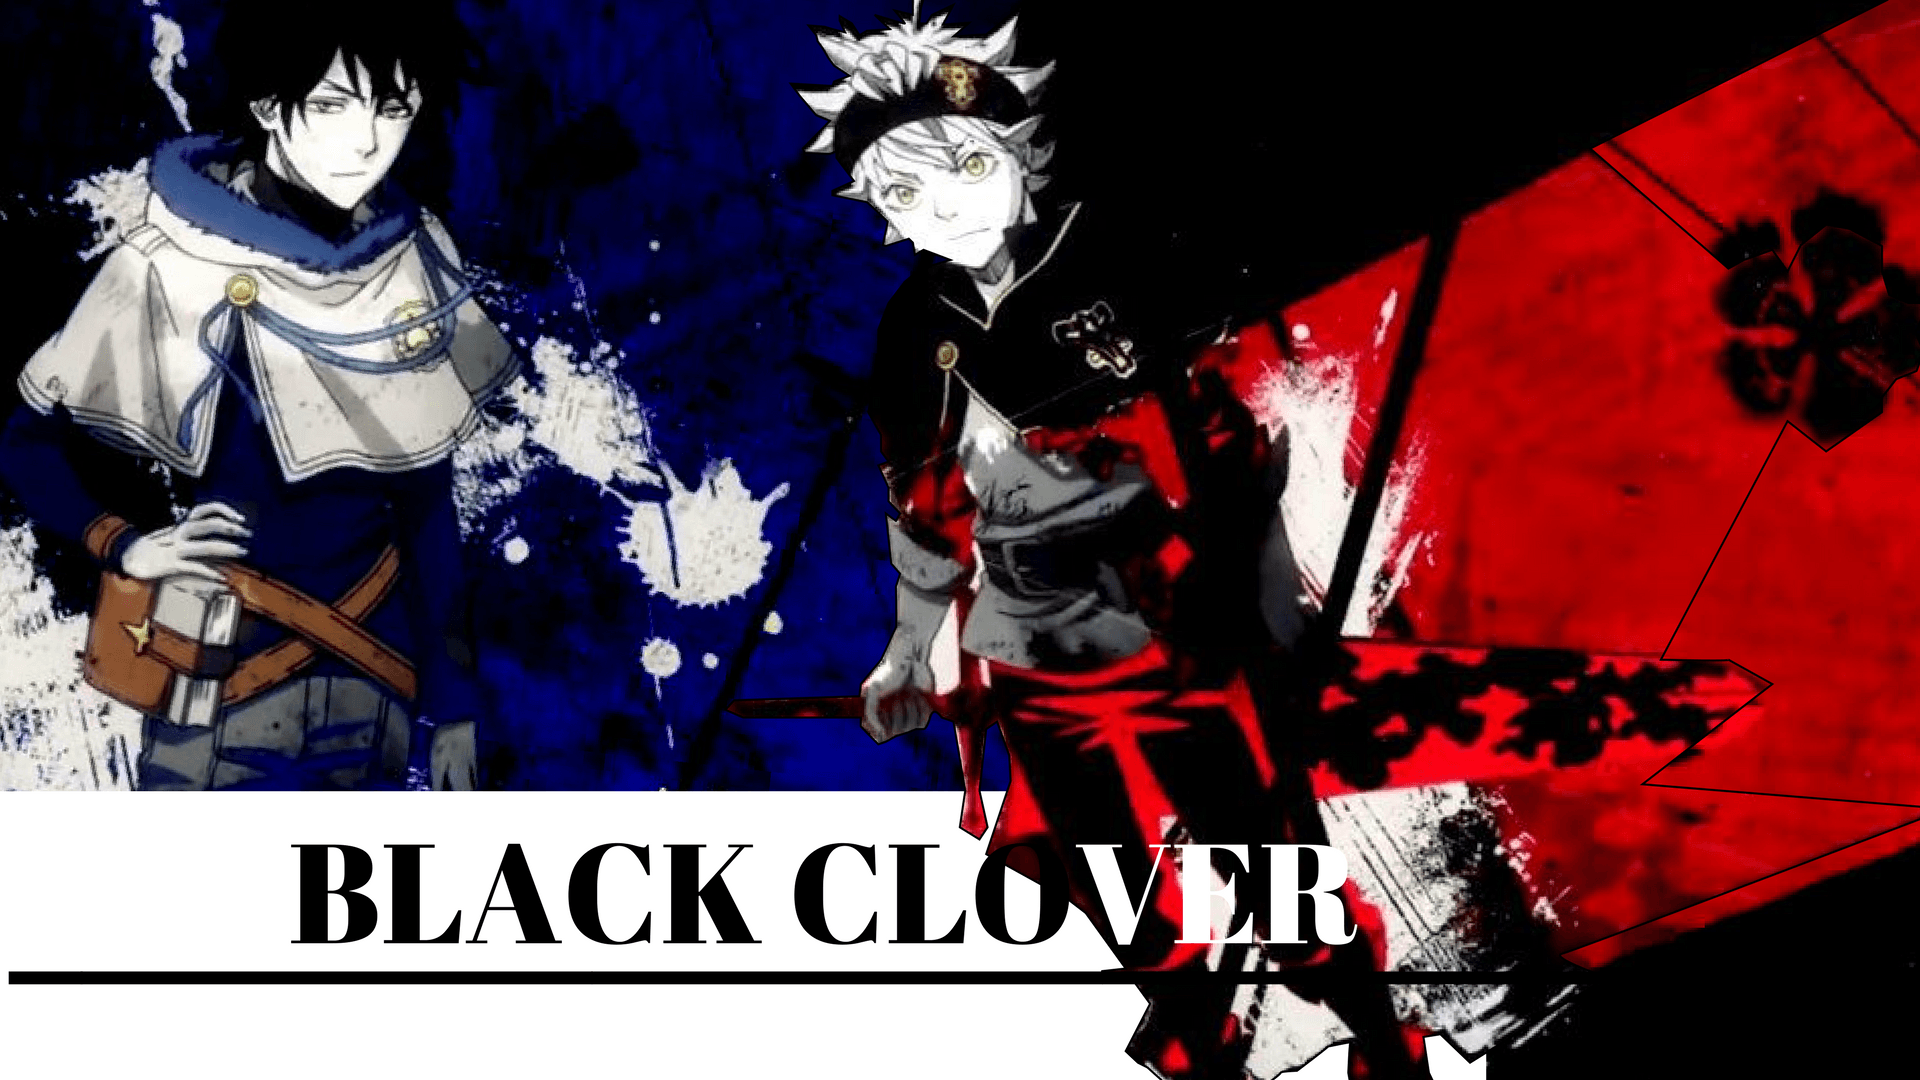 Black Clover Manga Wallpapers On Wallpaperdog